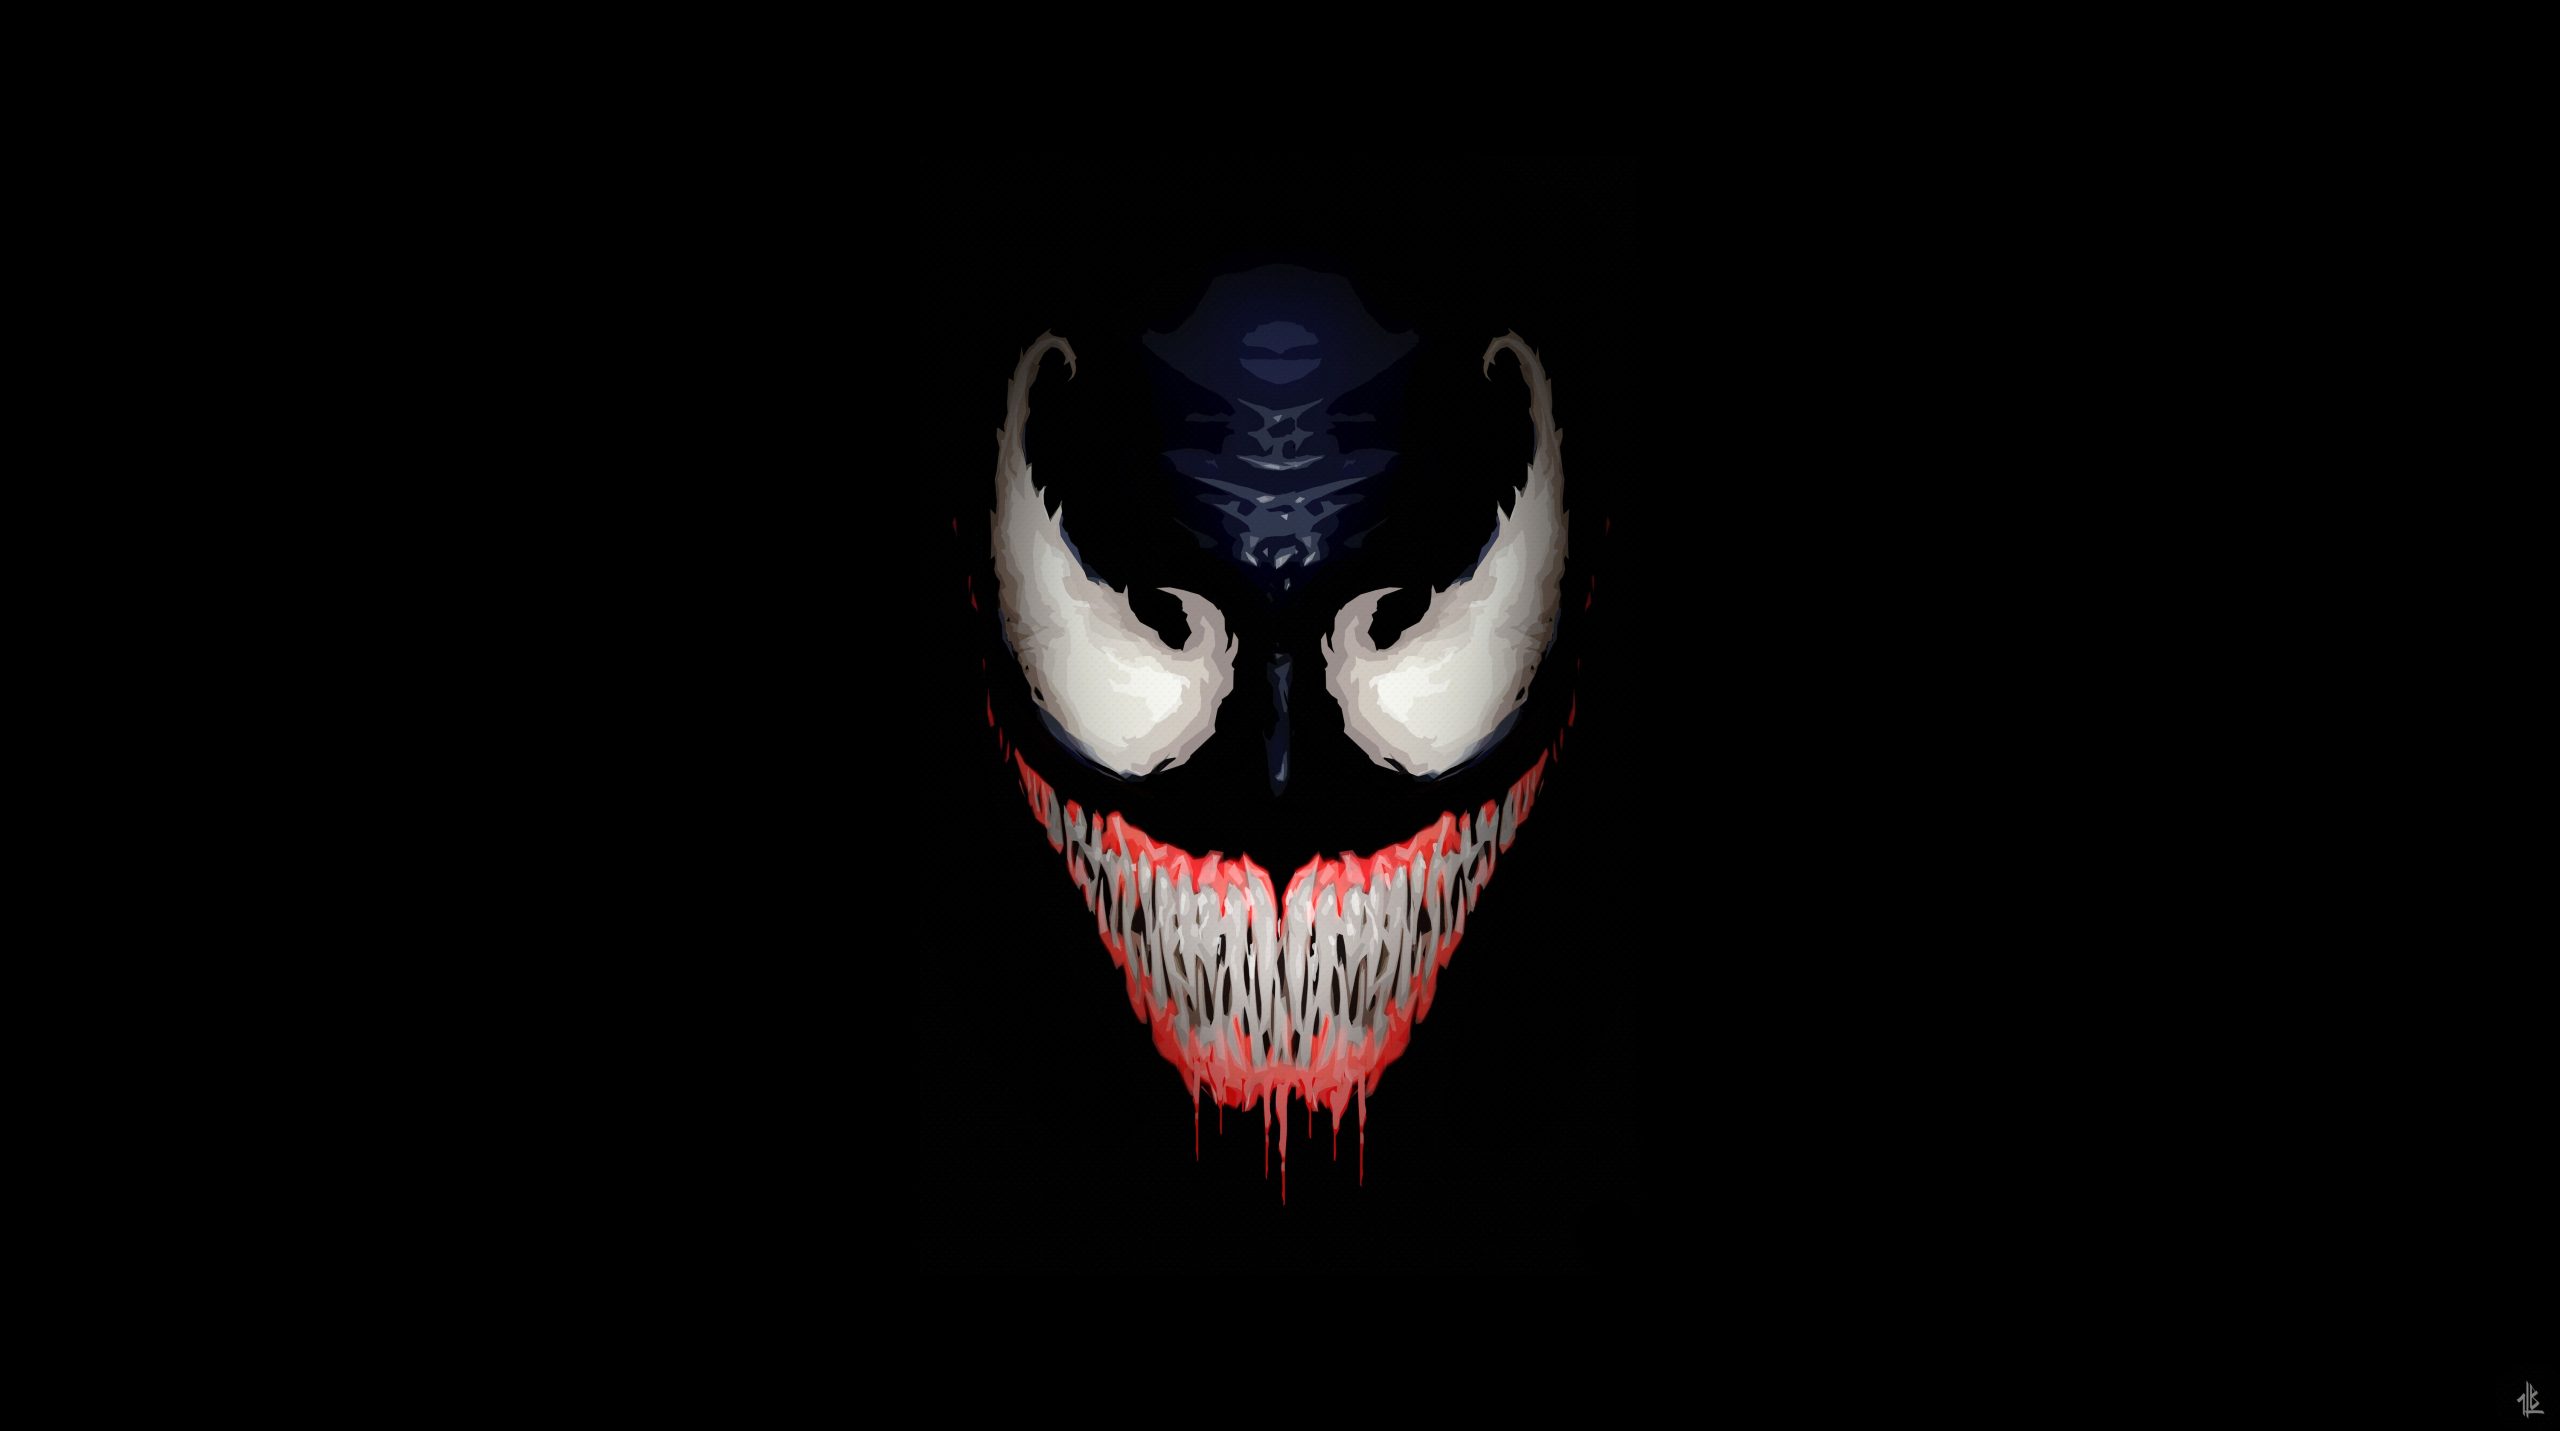 Wallpaper Venom Movie, Hd, 4k, 5k, Artwork, Supervillain